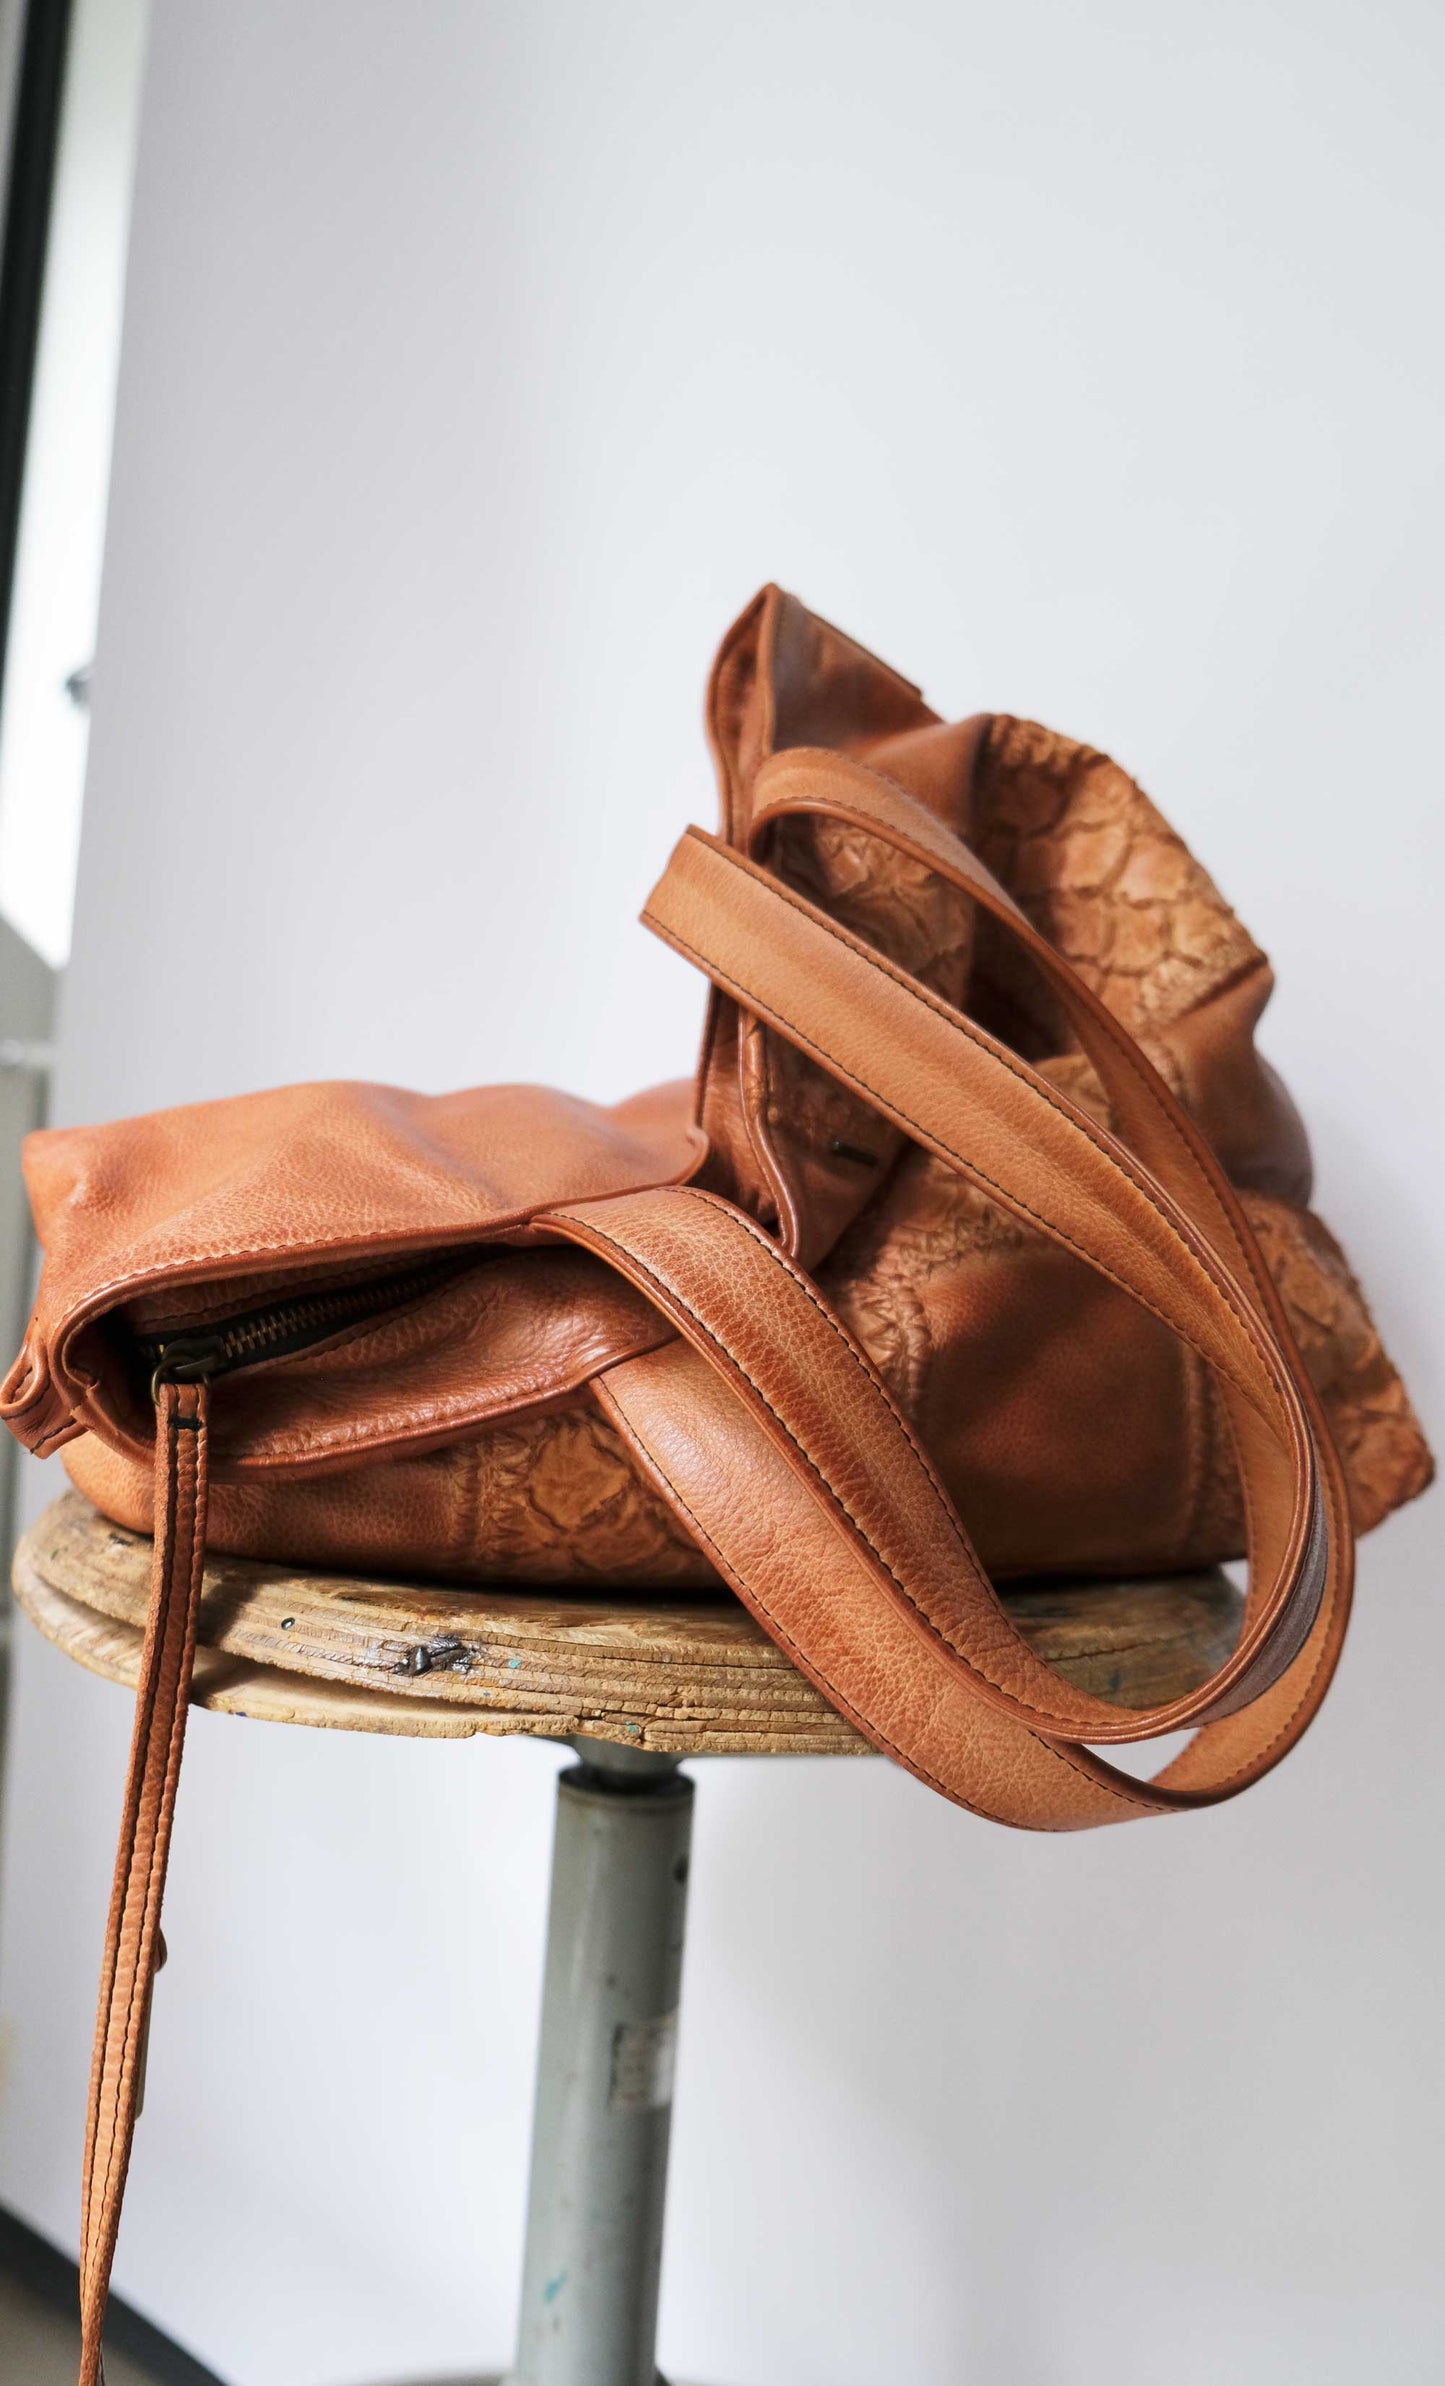 Sofi tote bag in Turner leather